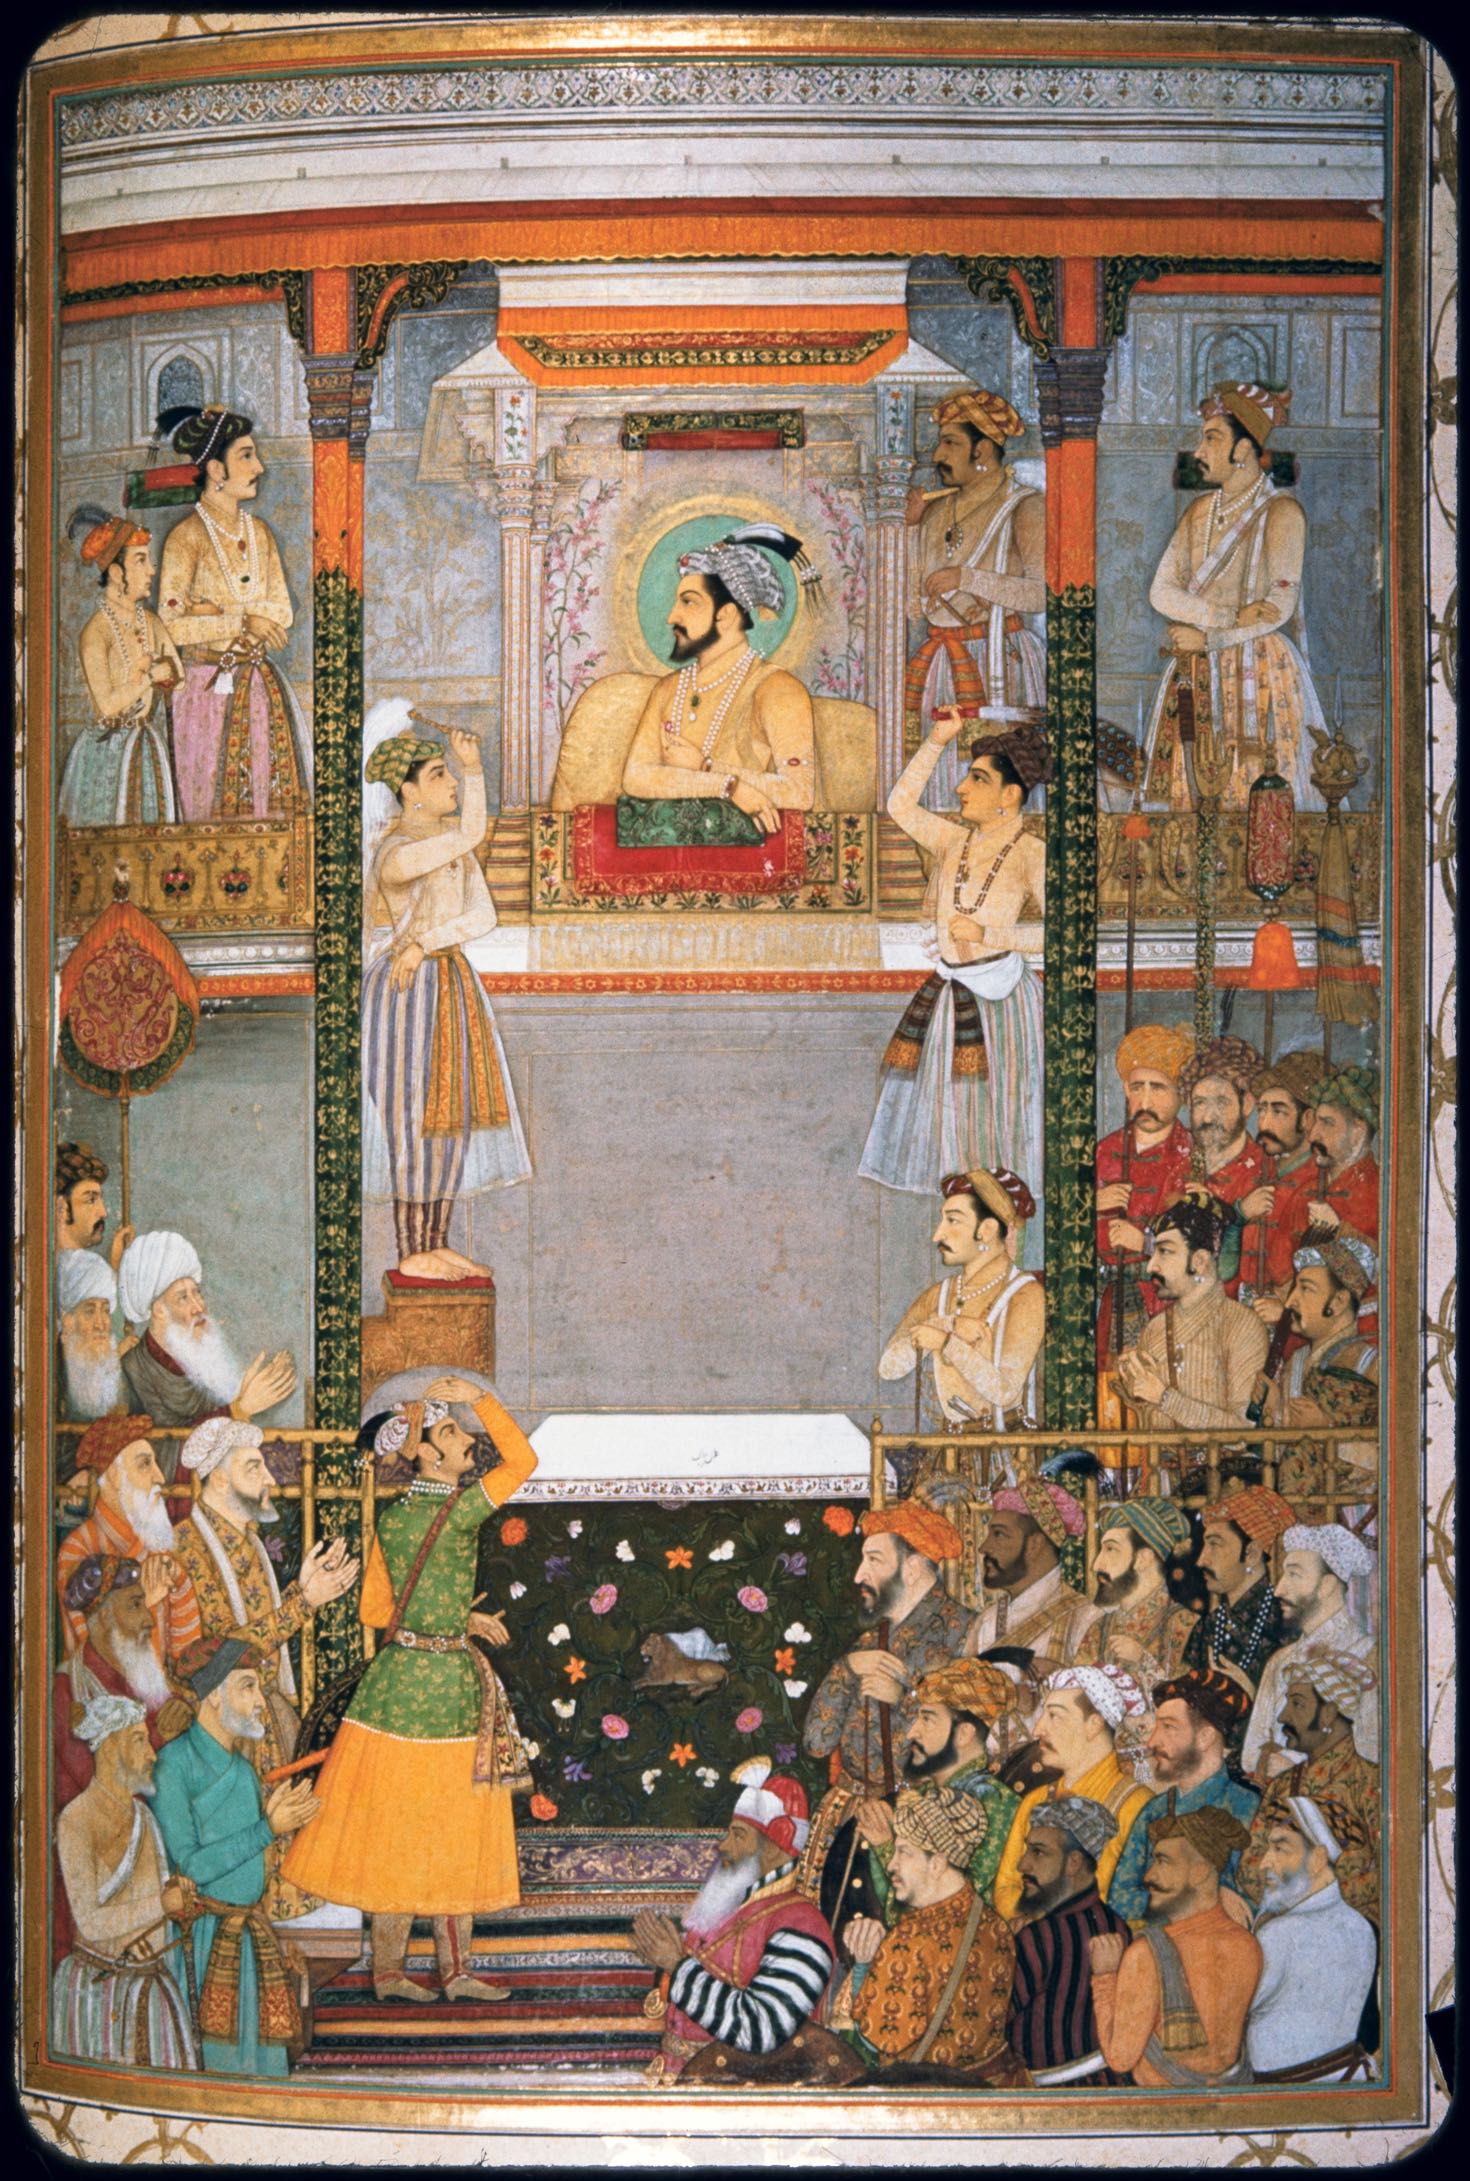 Shah Jahan honoring Prince Aurangzeb before his wedding, f.214b of the Padshahnama of Abd al-Hamid Lahawri (RCIN 1005025)